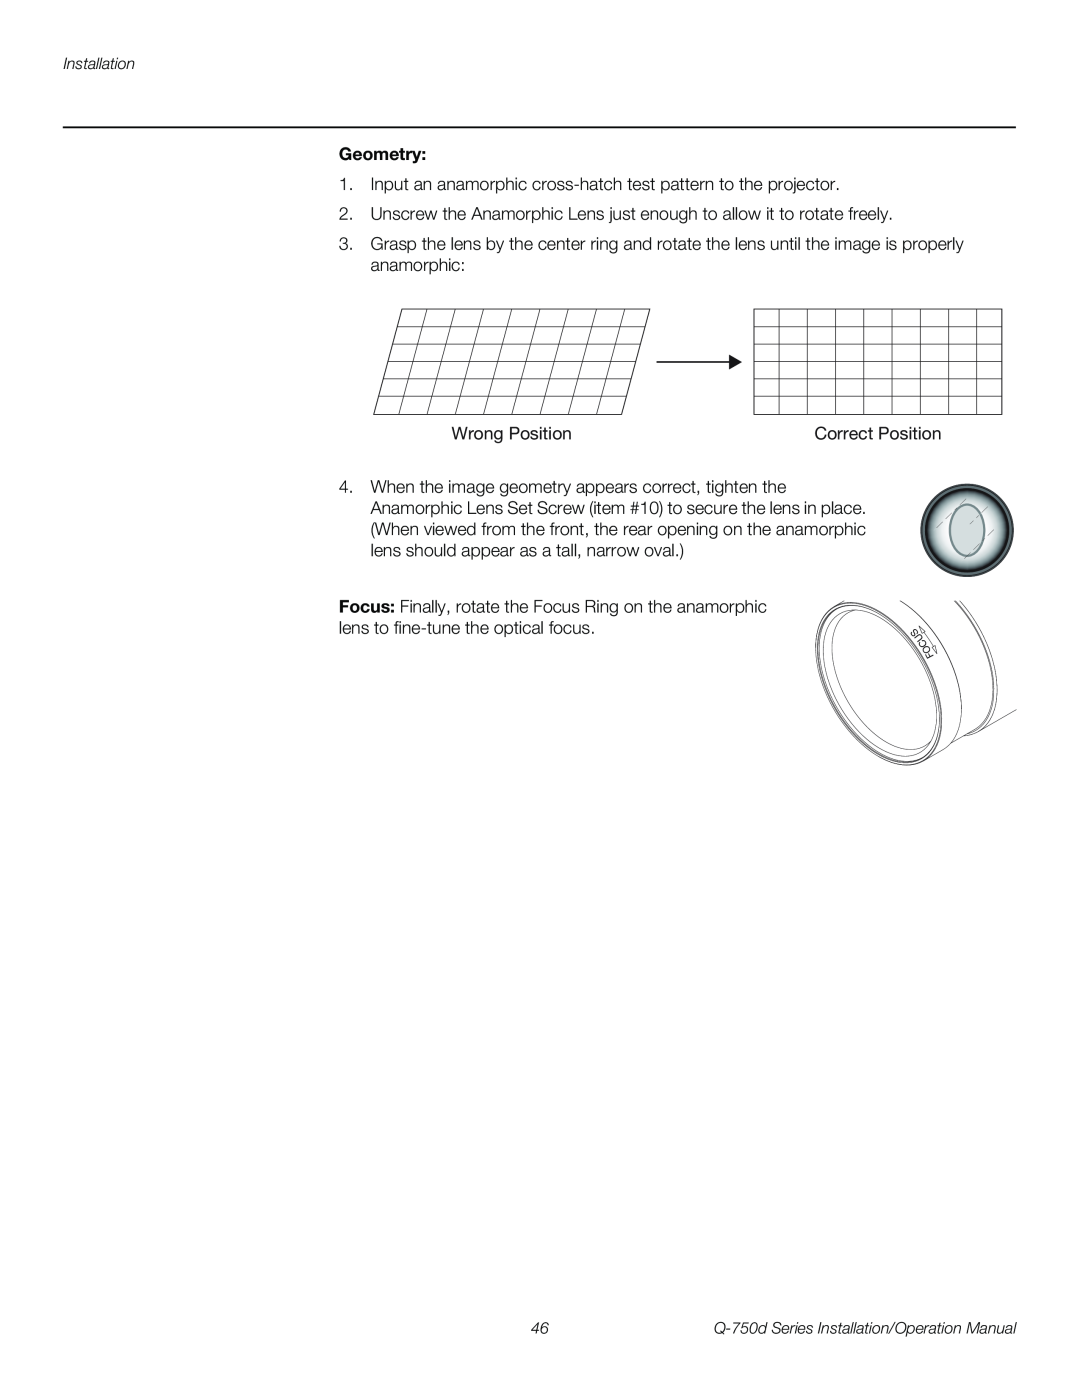 Runco Q-750D operation manual Geometry 